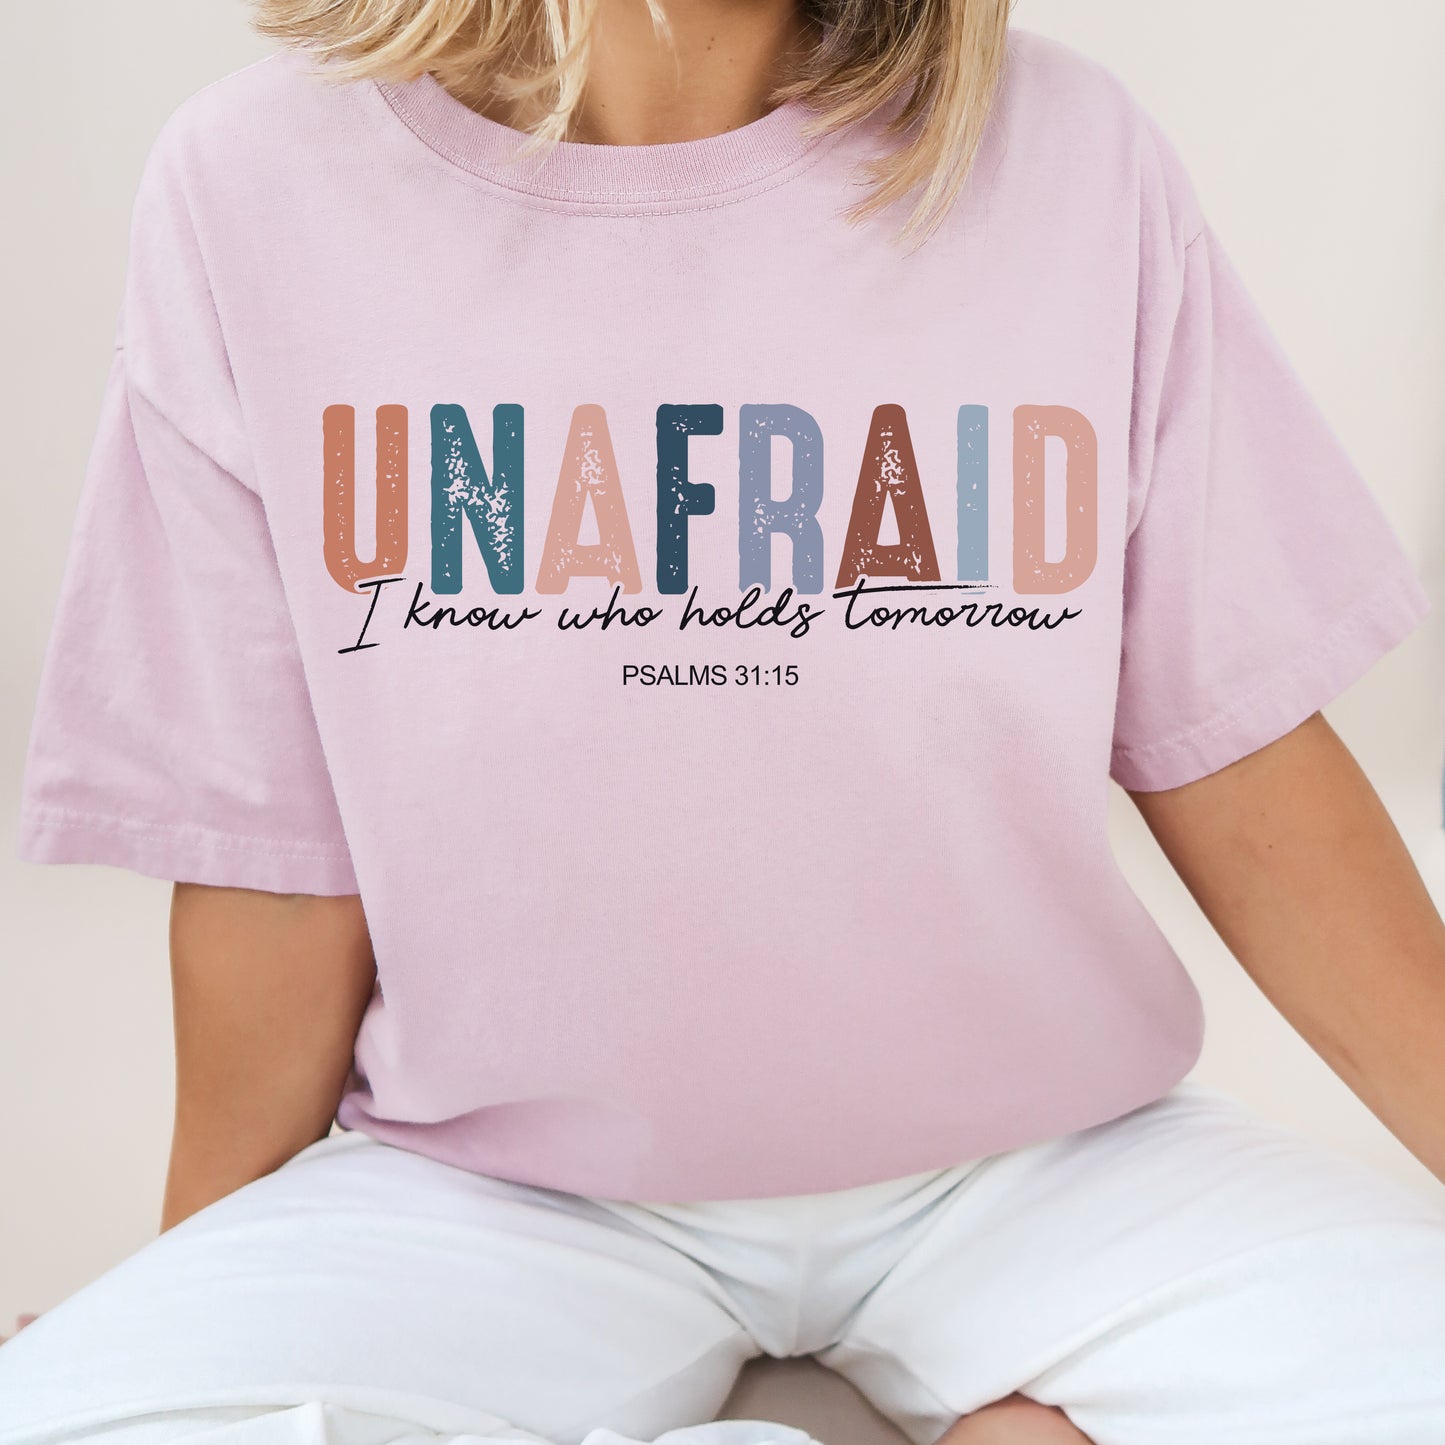 UNAFRAID T-shirt